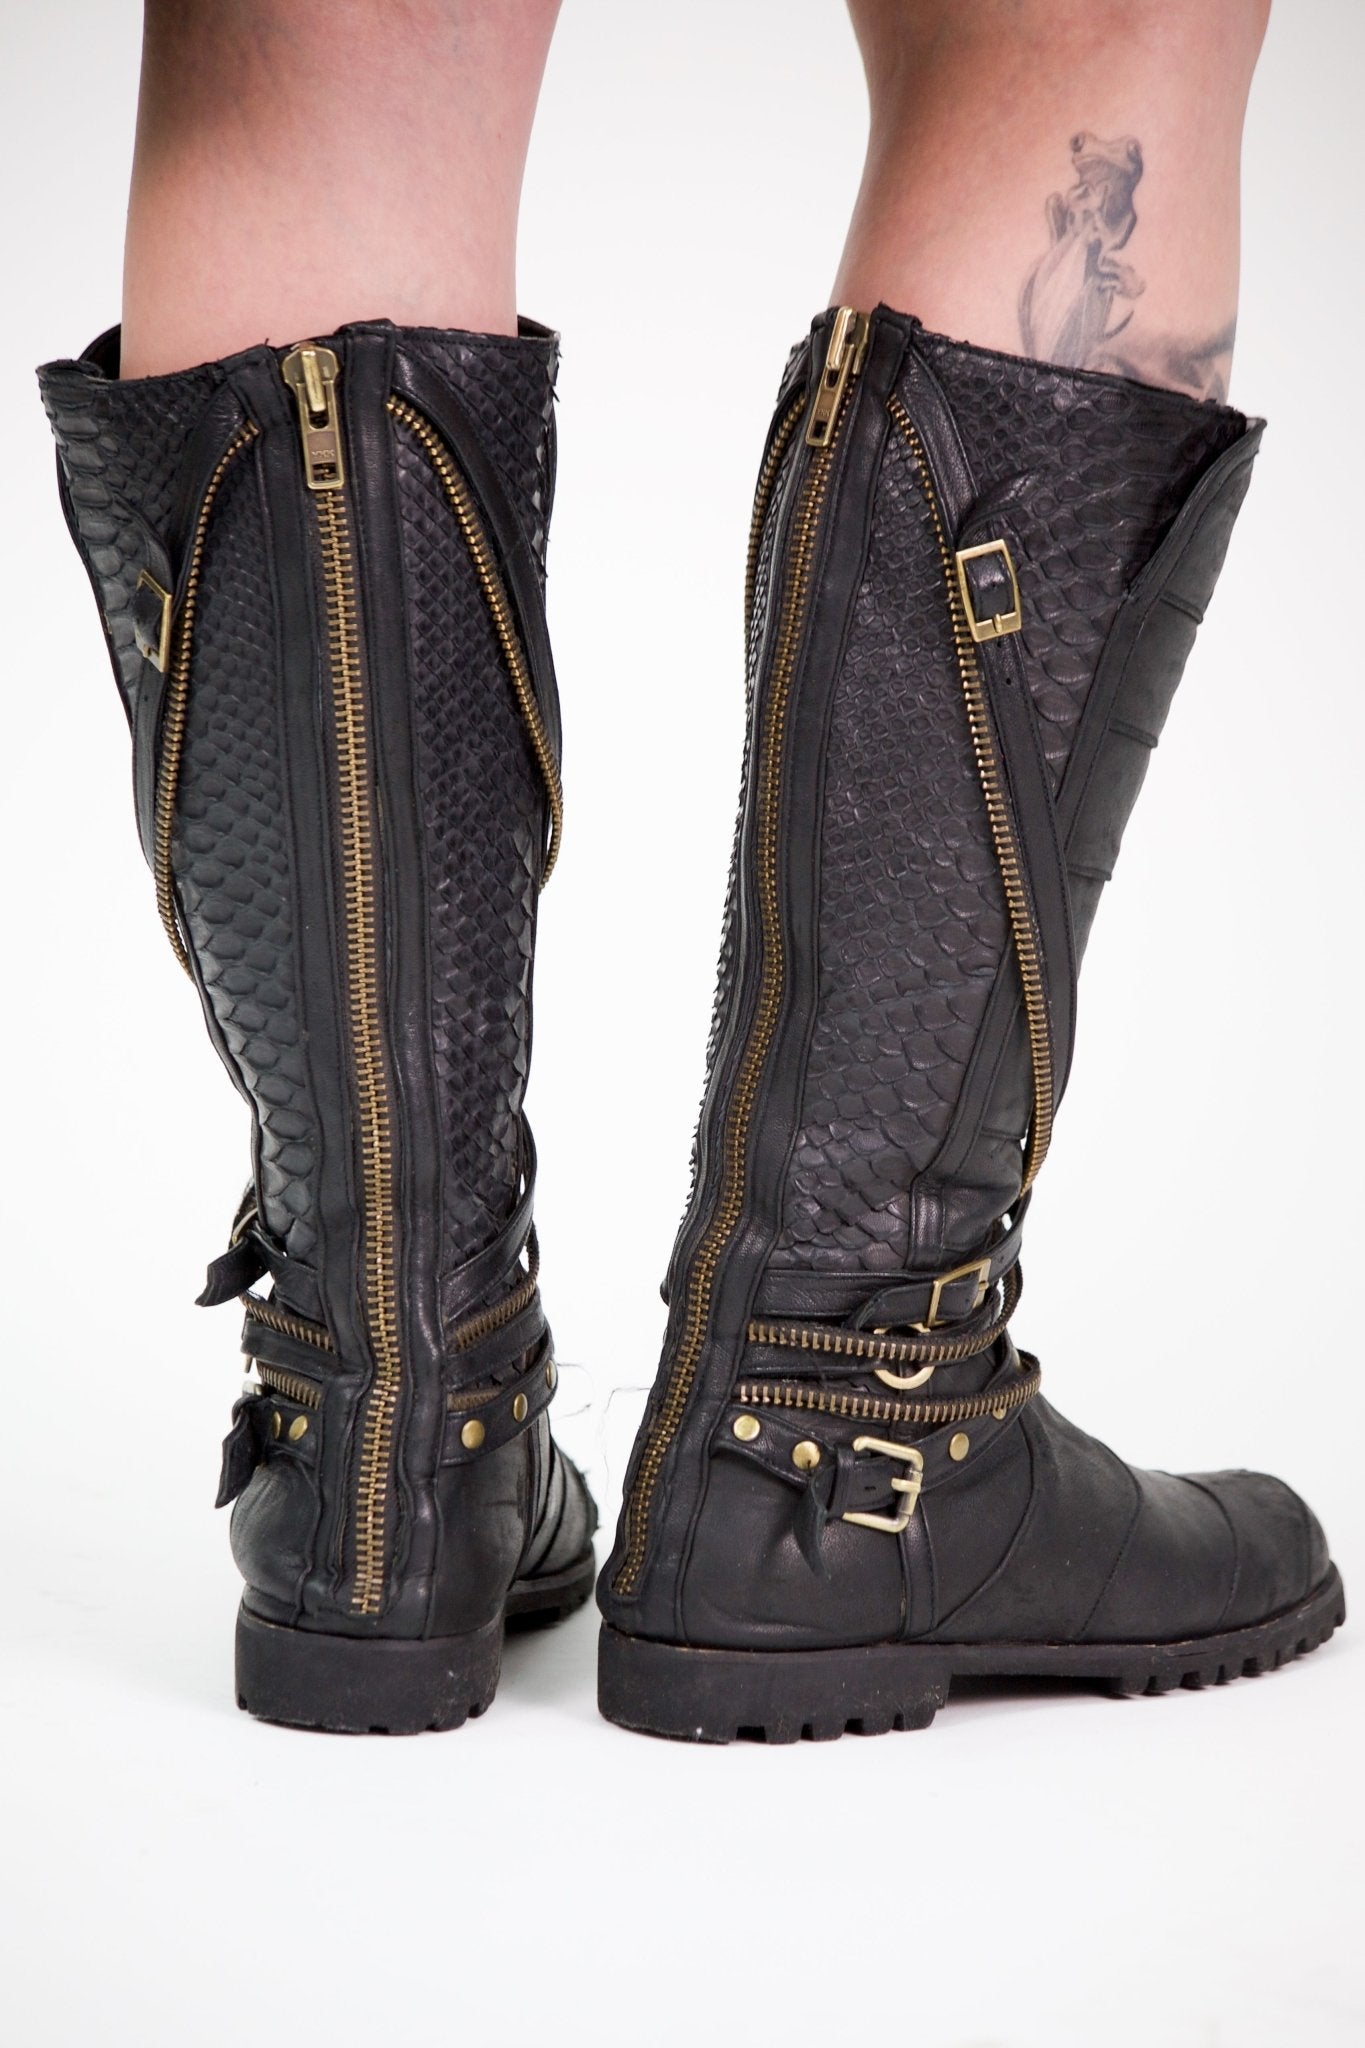 Athena leather boots - anahata designs